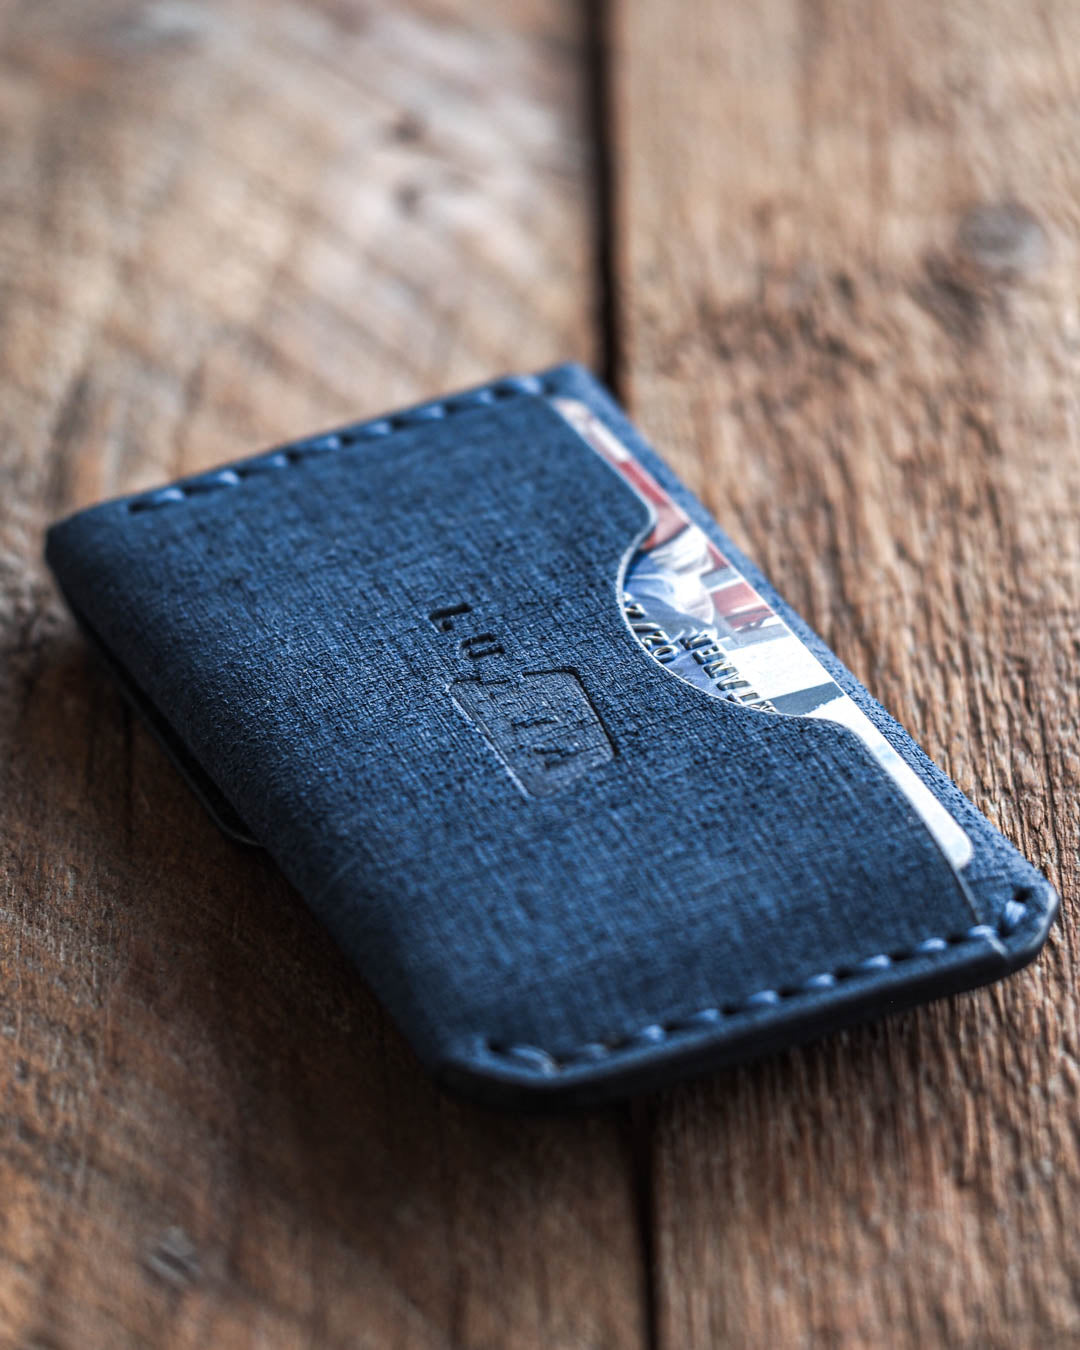 Messenger Wallet Fabric. handmade leather wallet back